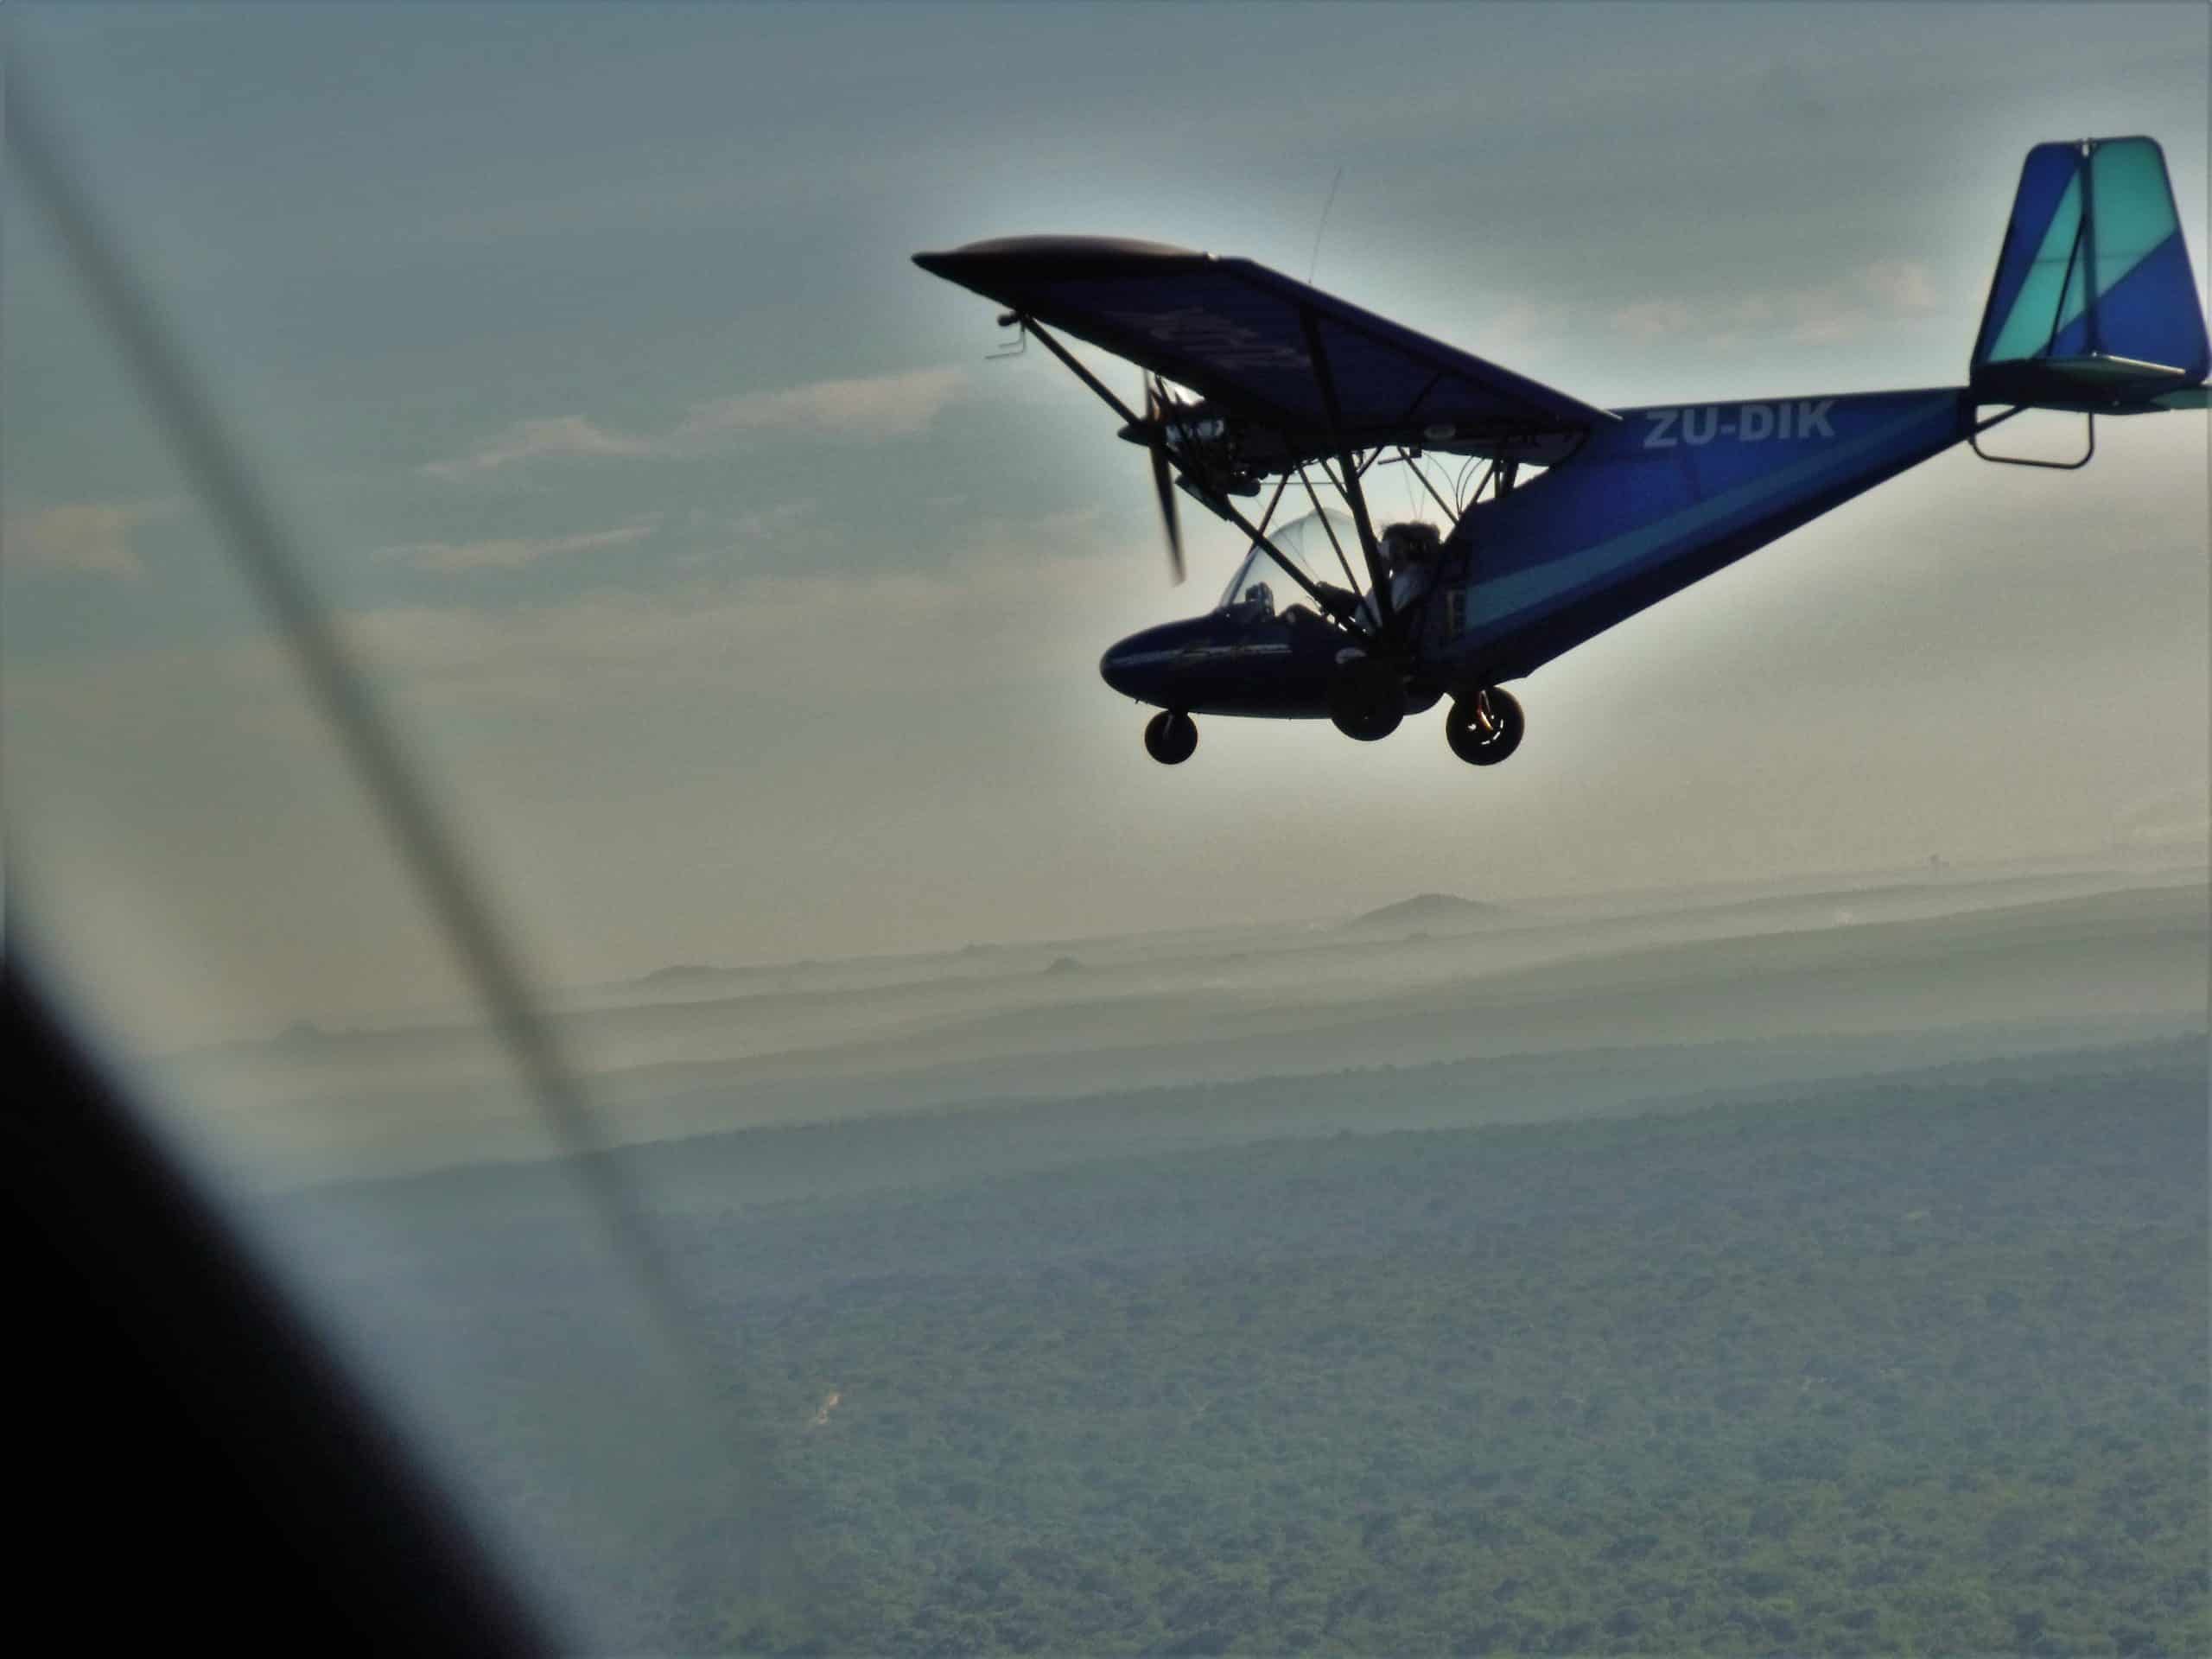 Morning microloight flights over Kruger